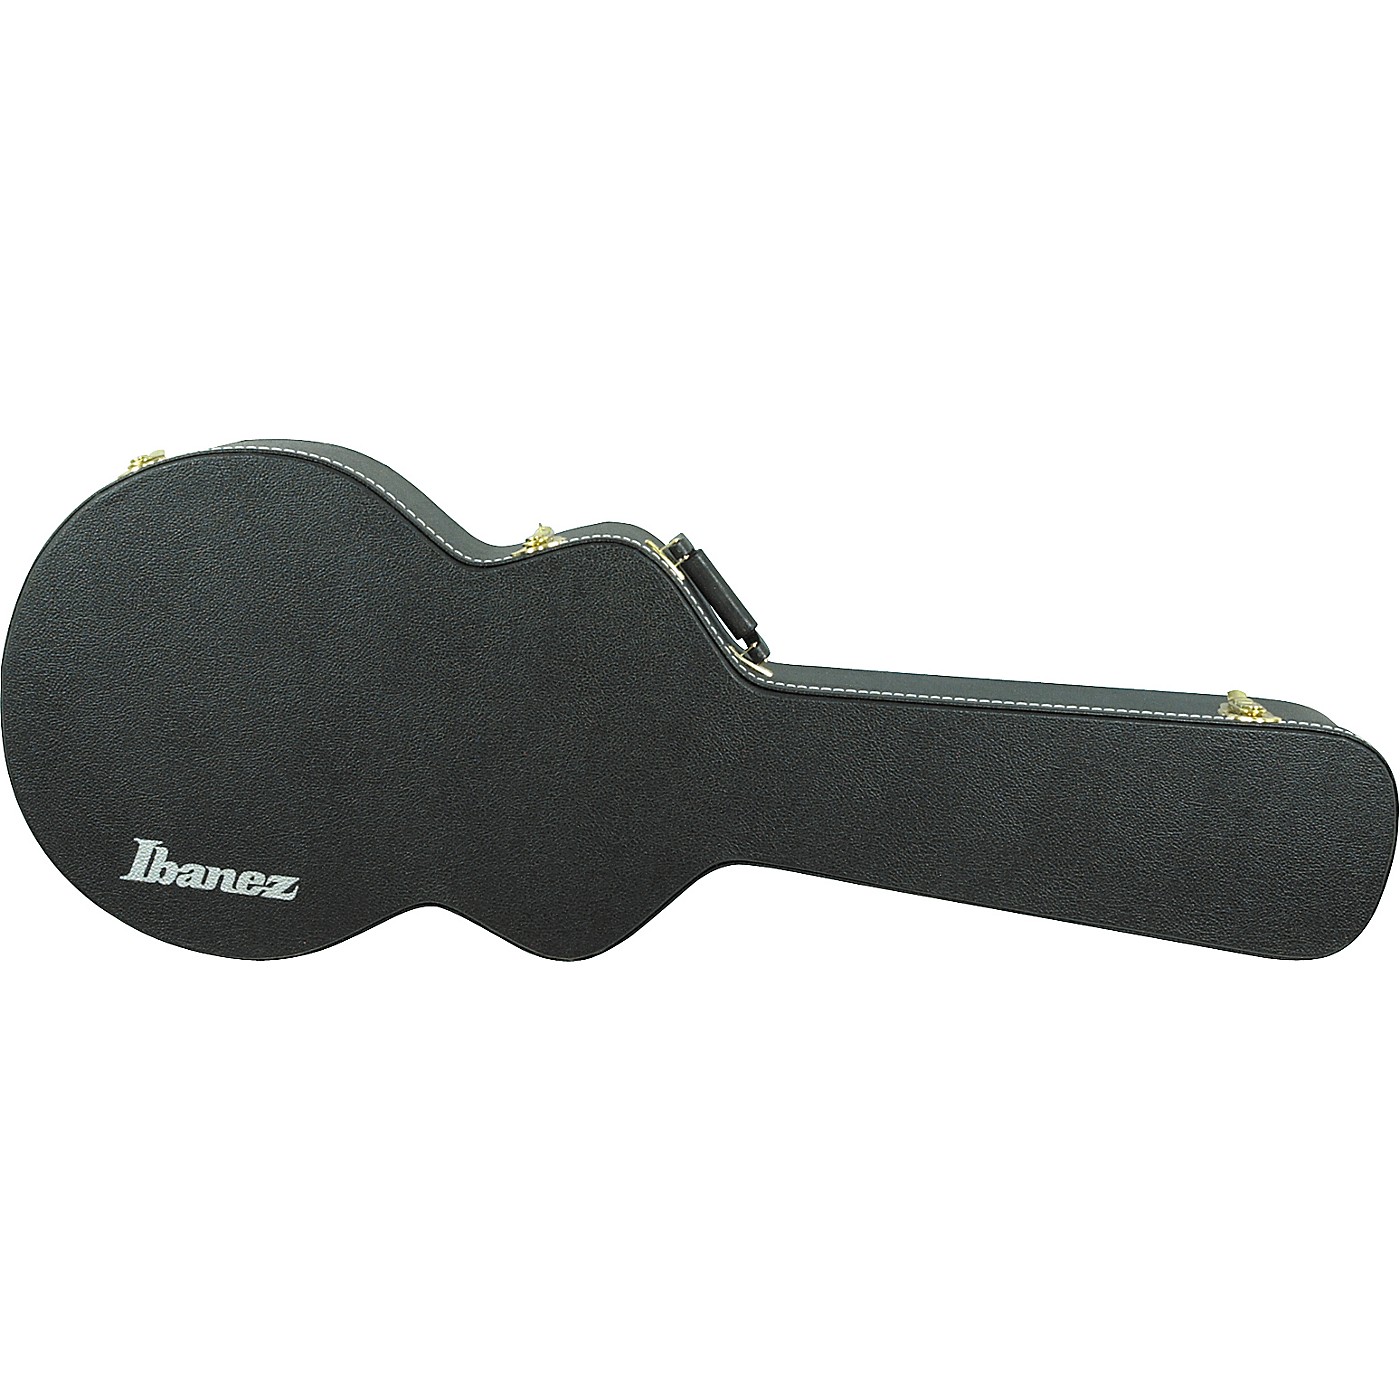 Ibanez AM100C Artcore Guitar Case for AM73, AM73T, and AM77 thumbnail